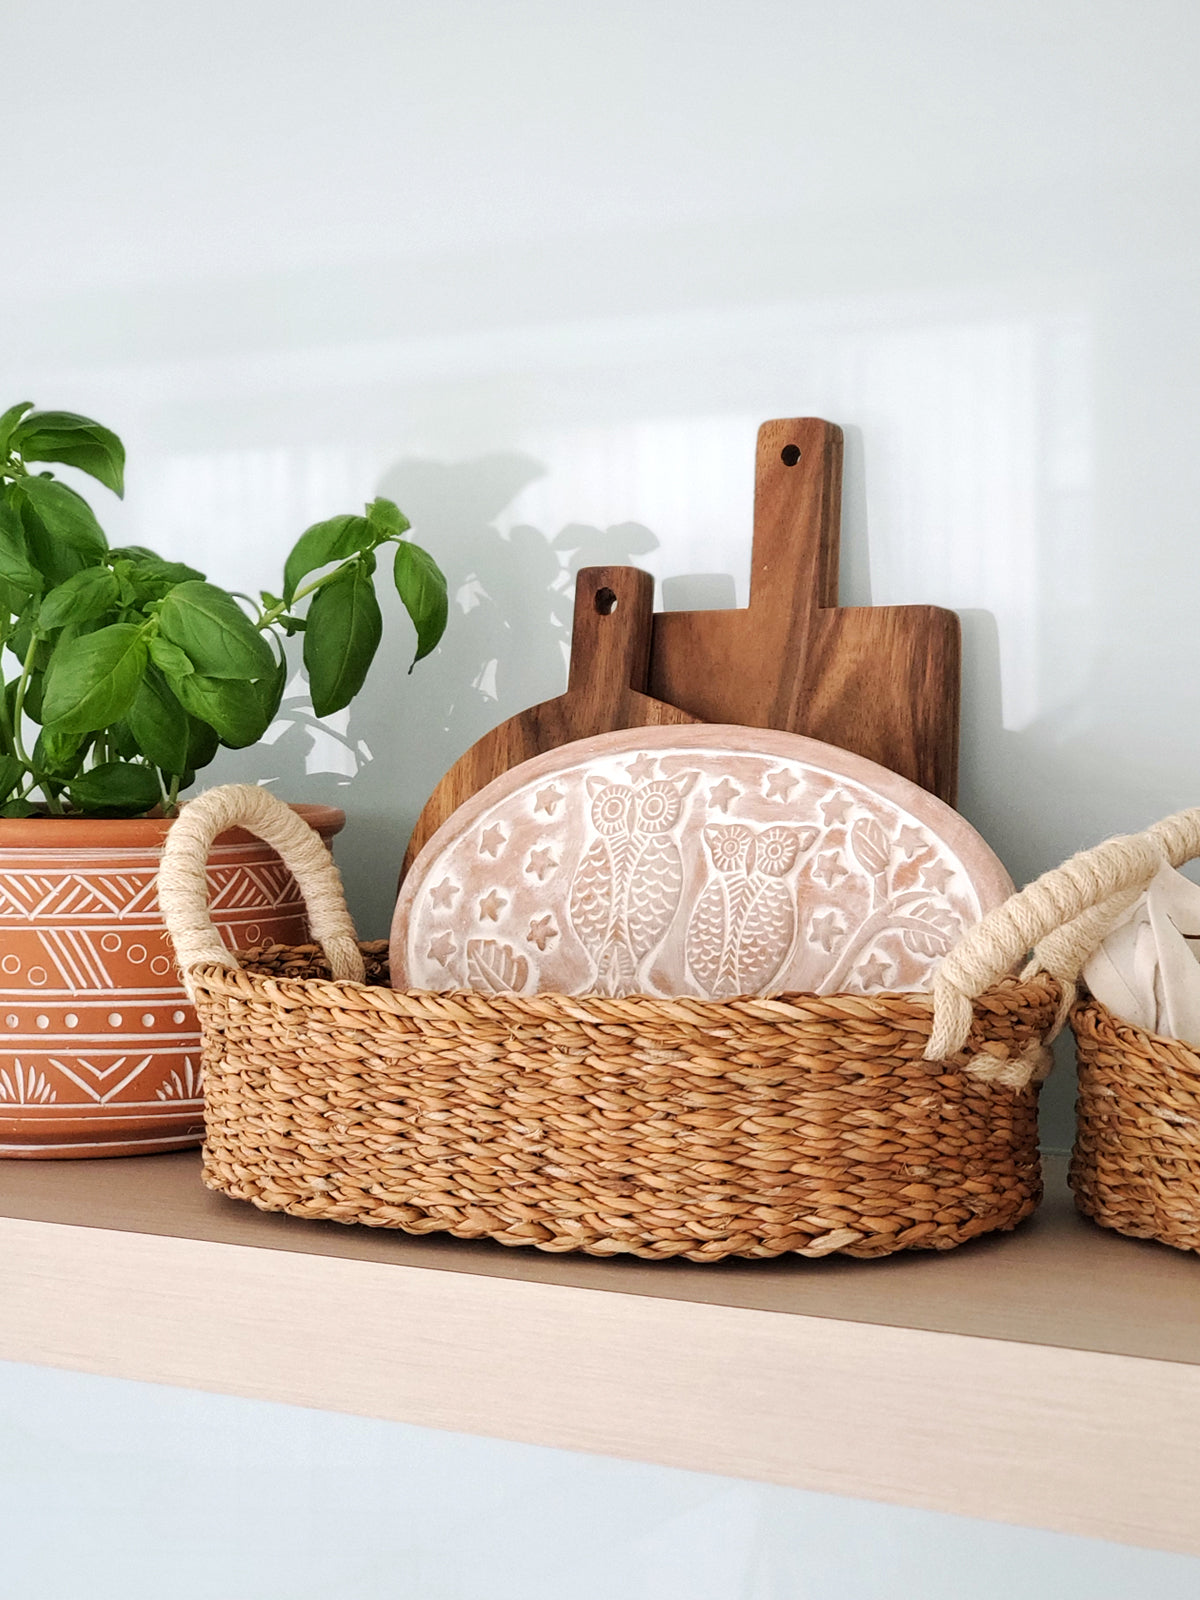 Buy Bread Warmer & Basket - Owl Oval by KORISSA by KORISSA